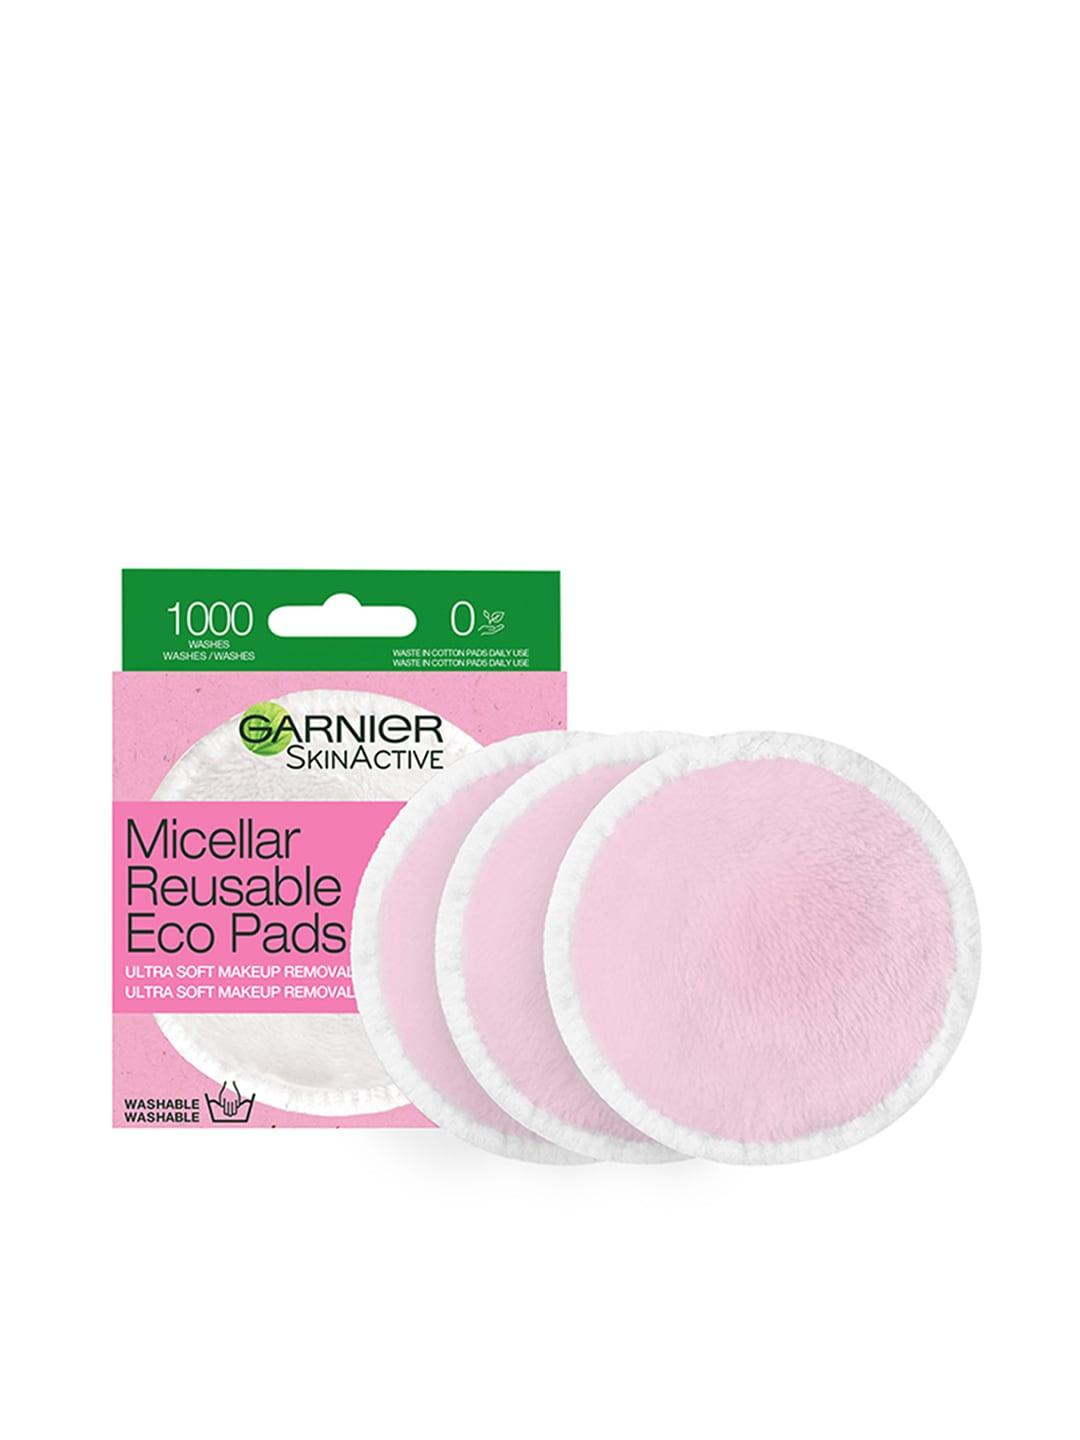 Garnier Set of 3 Micellar Reusable Eco Pads for Makeup Removal